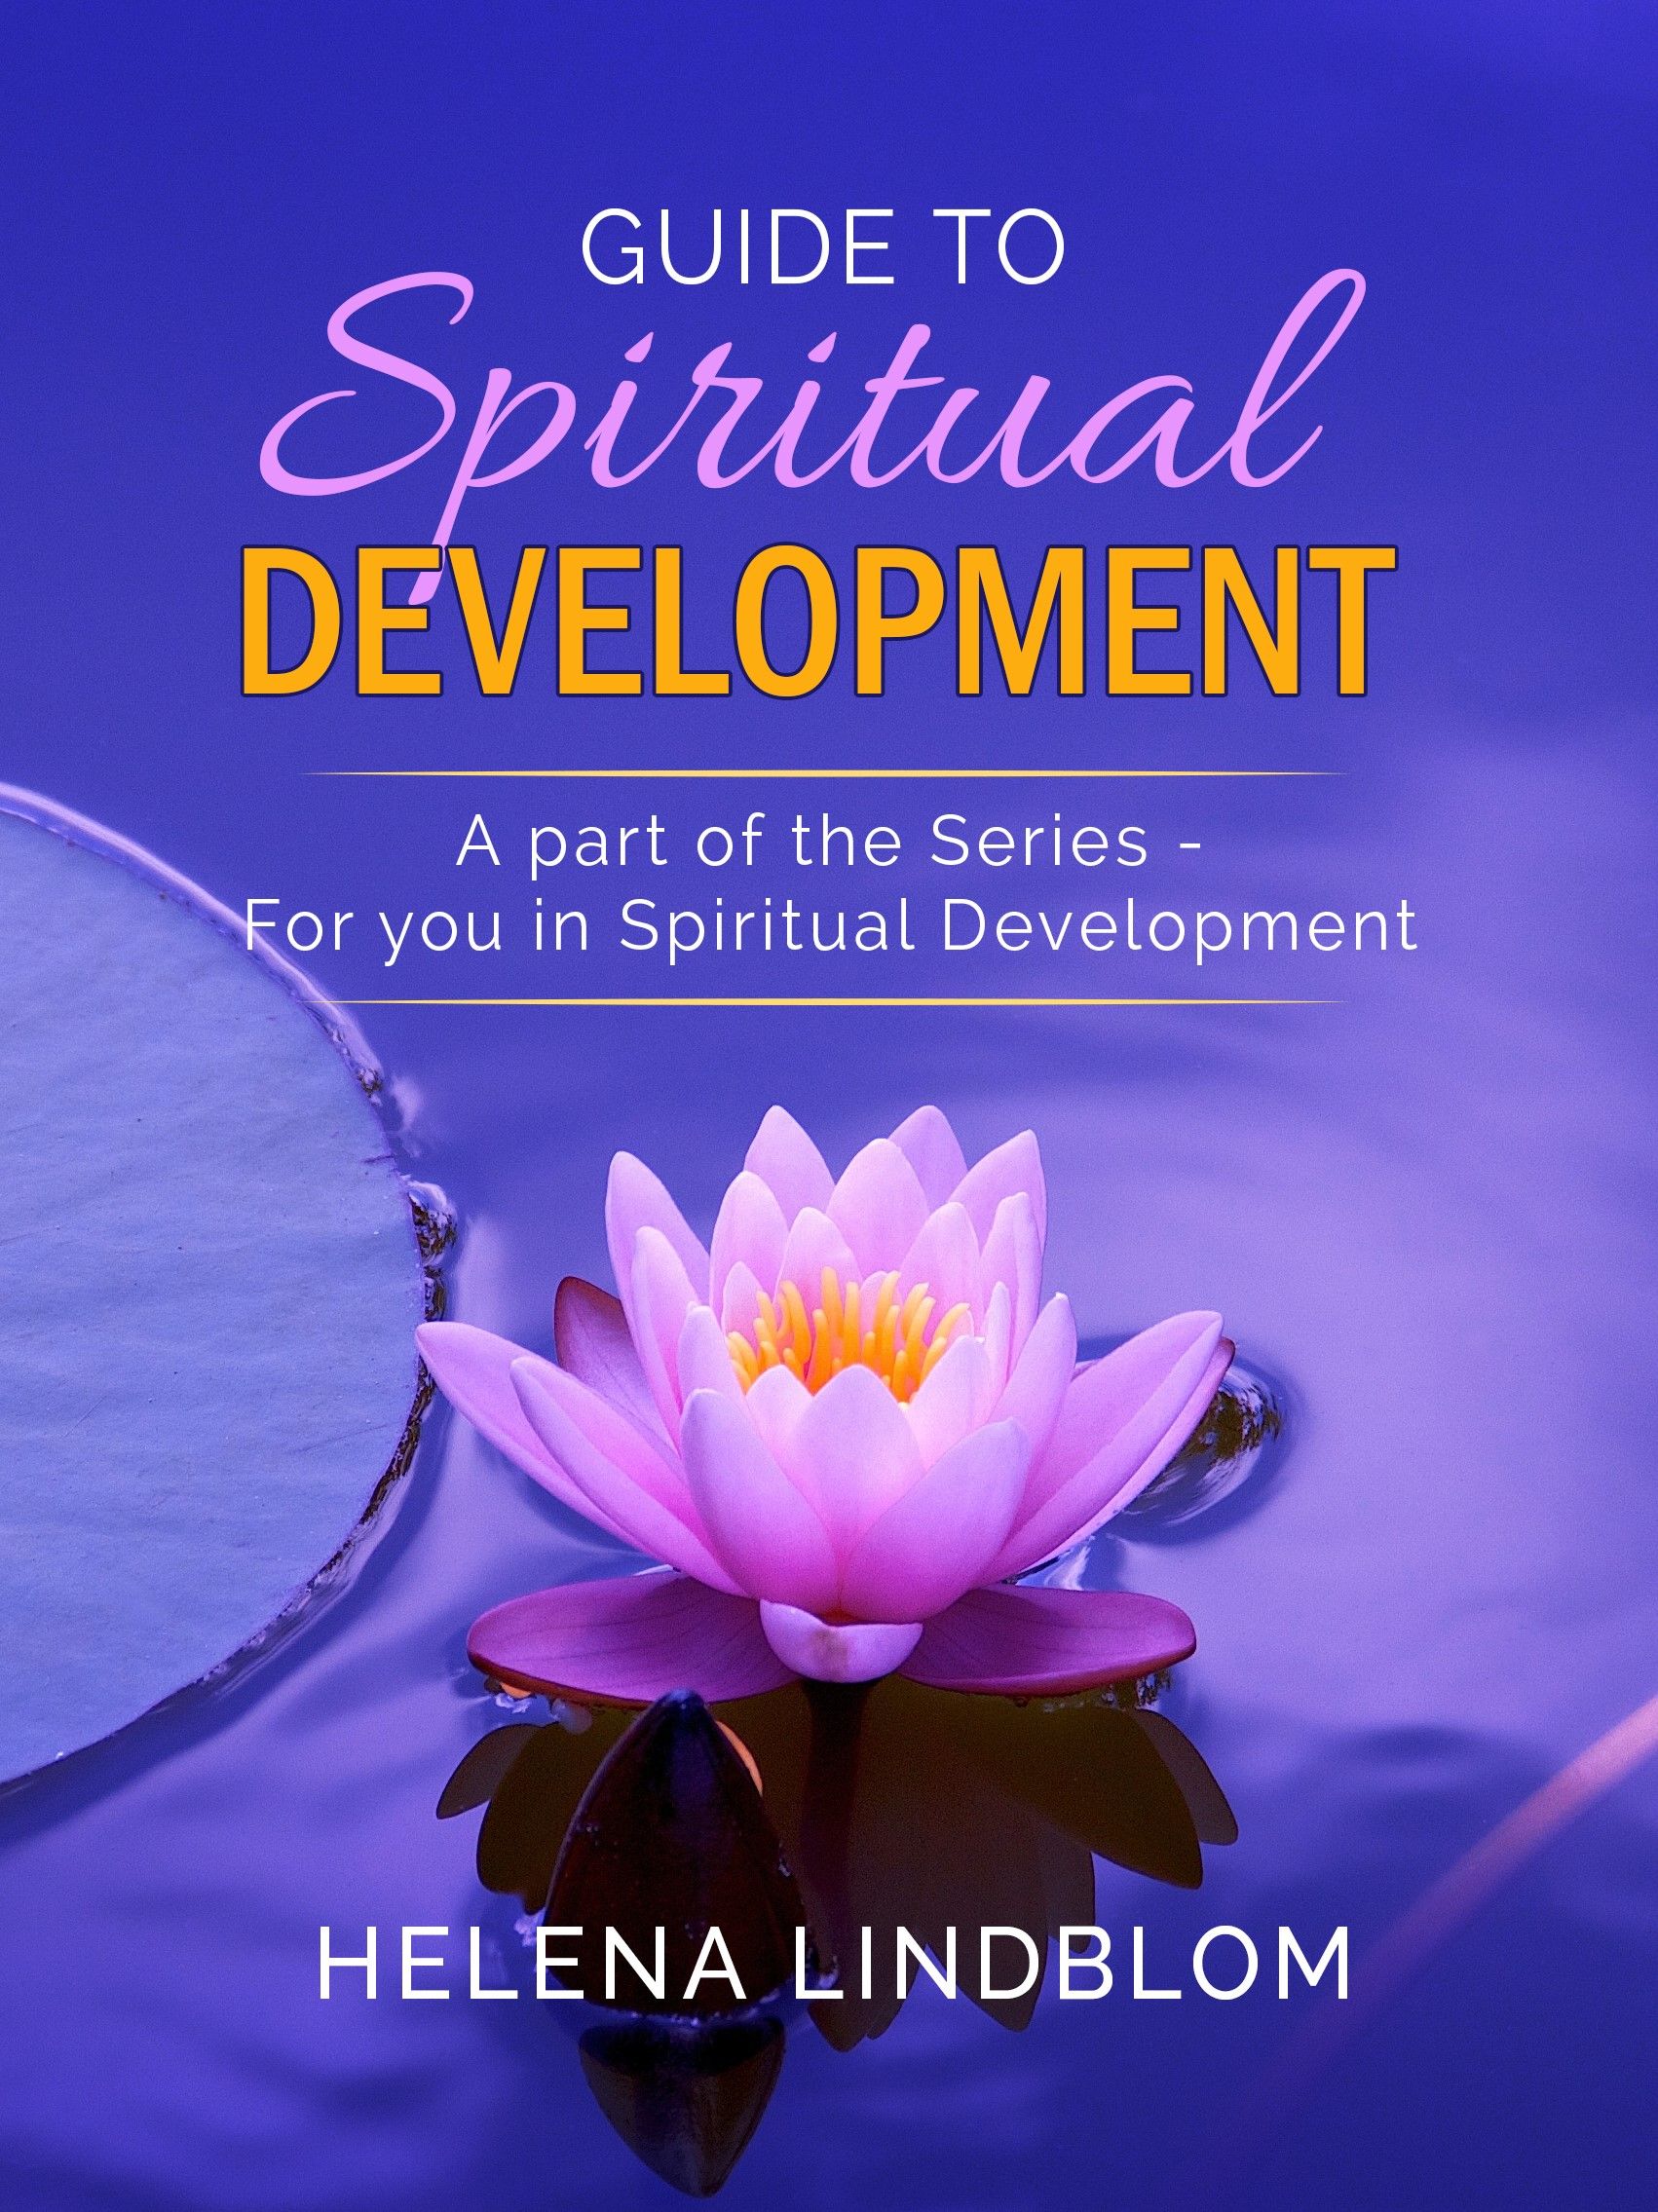 Guide to Spiritual Development, audiobook by Helena Lindblom